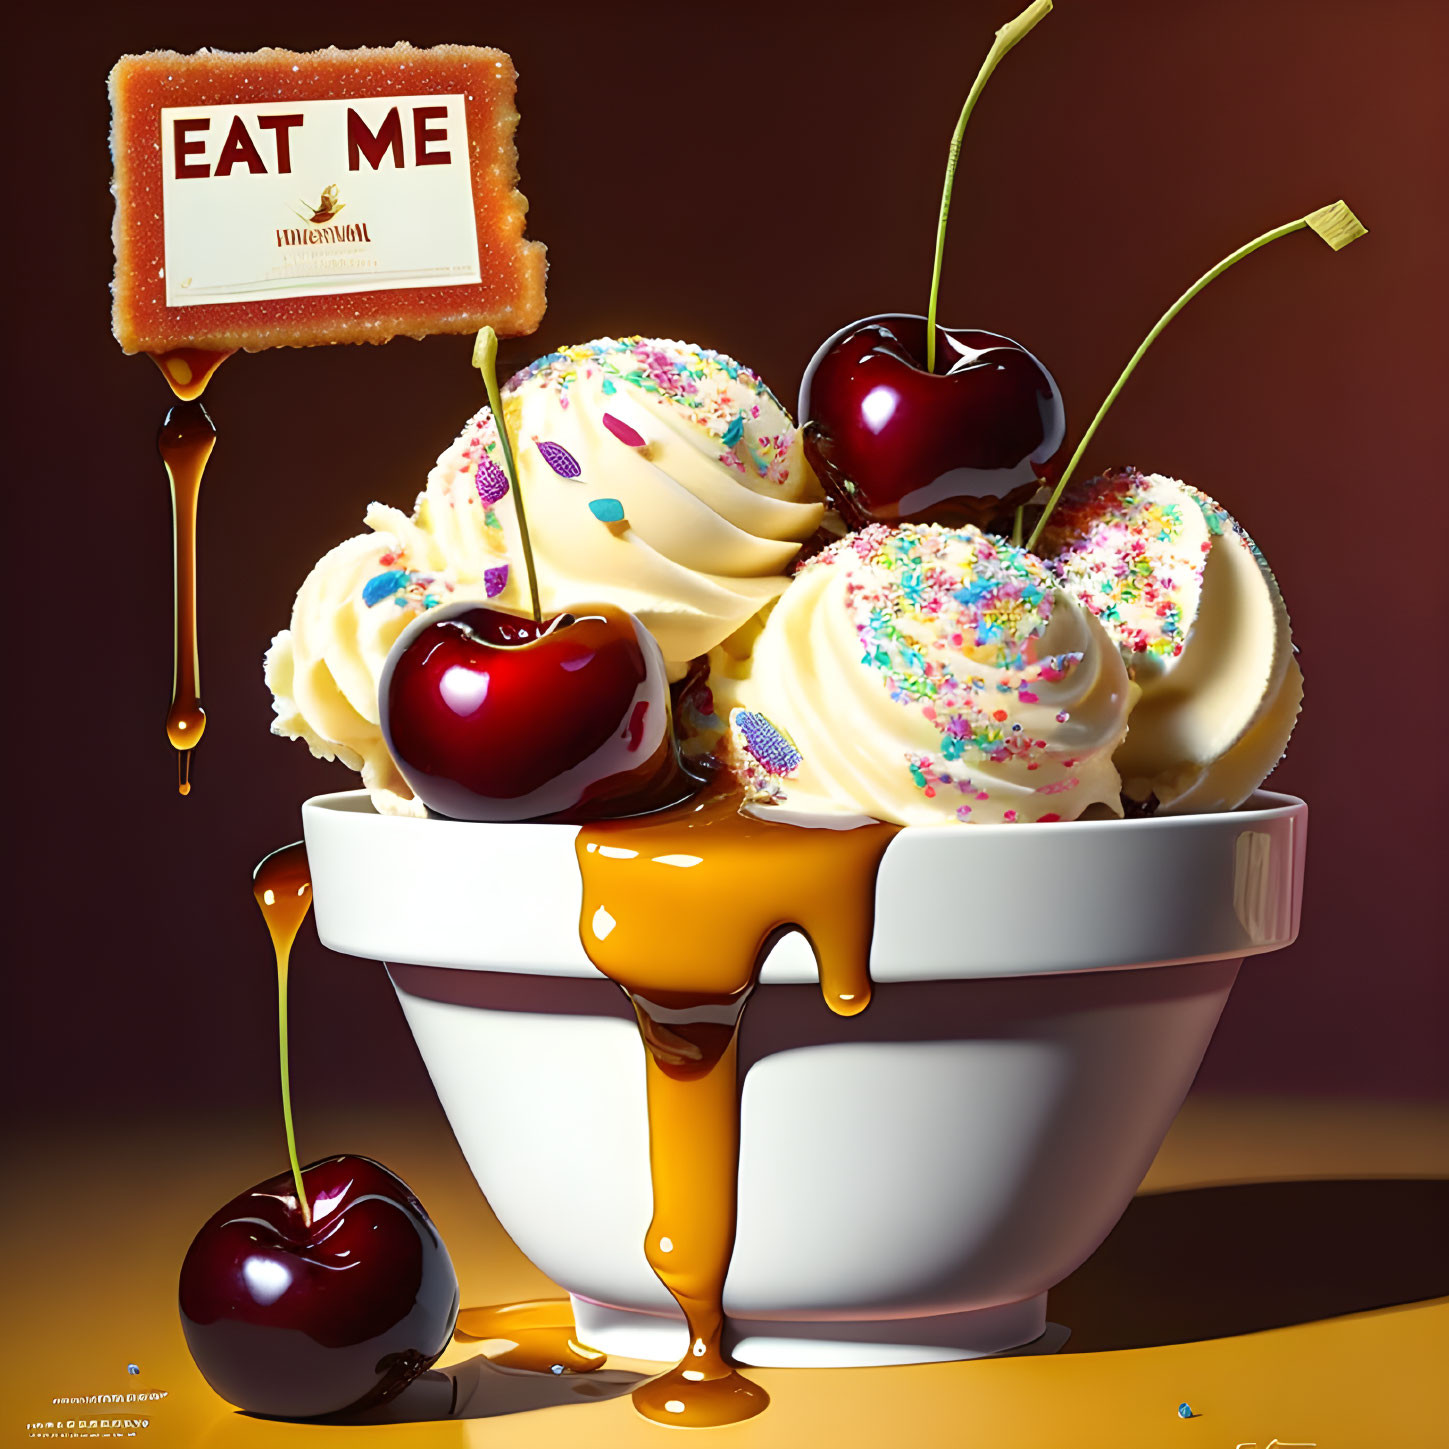 Vanilla Ice Cream Bowl with Cherries, Caramel Sauce, and Confetti Decor, Featuring 